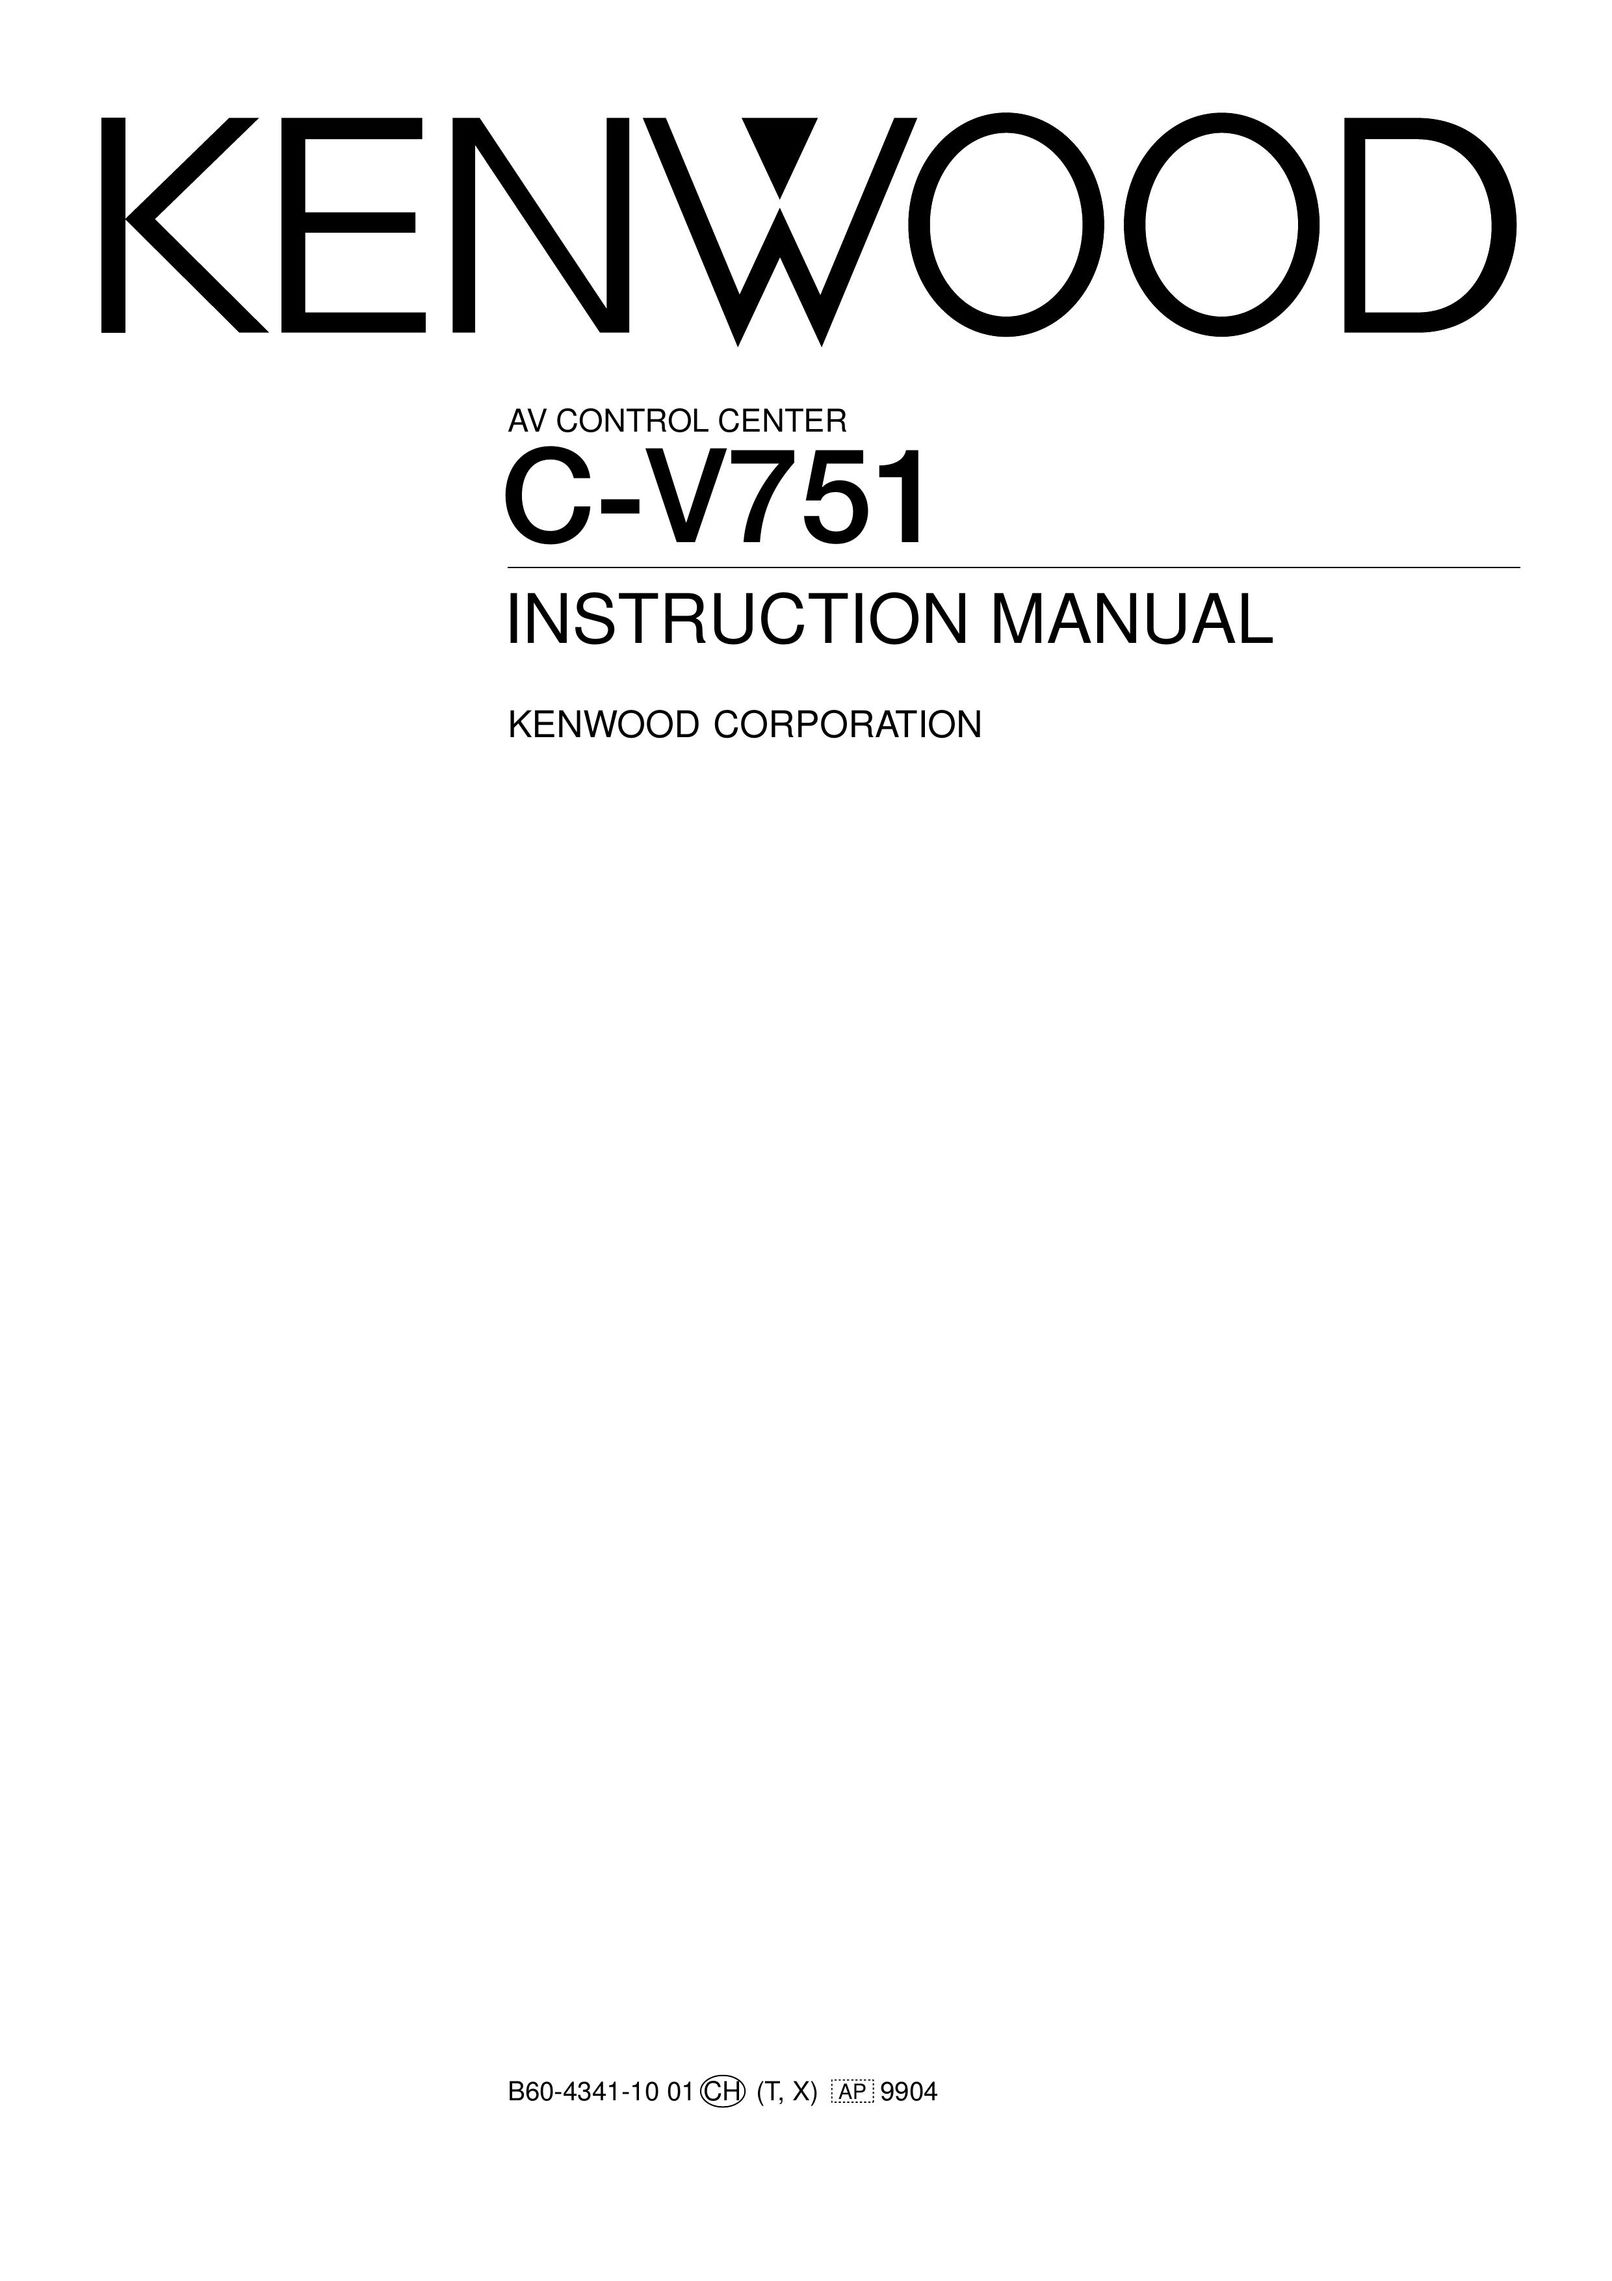 Kenwood C-V751 DVD Player User Manual